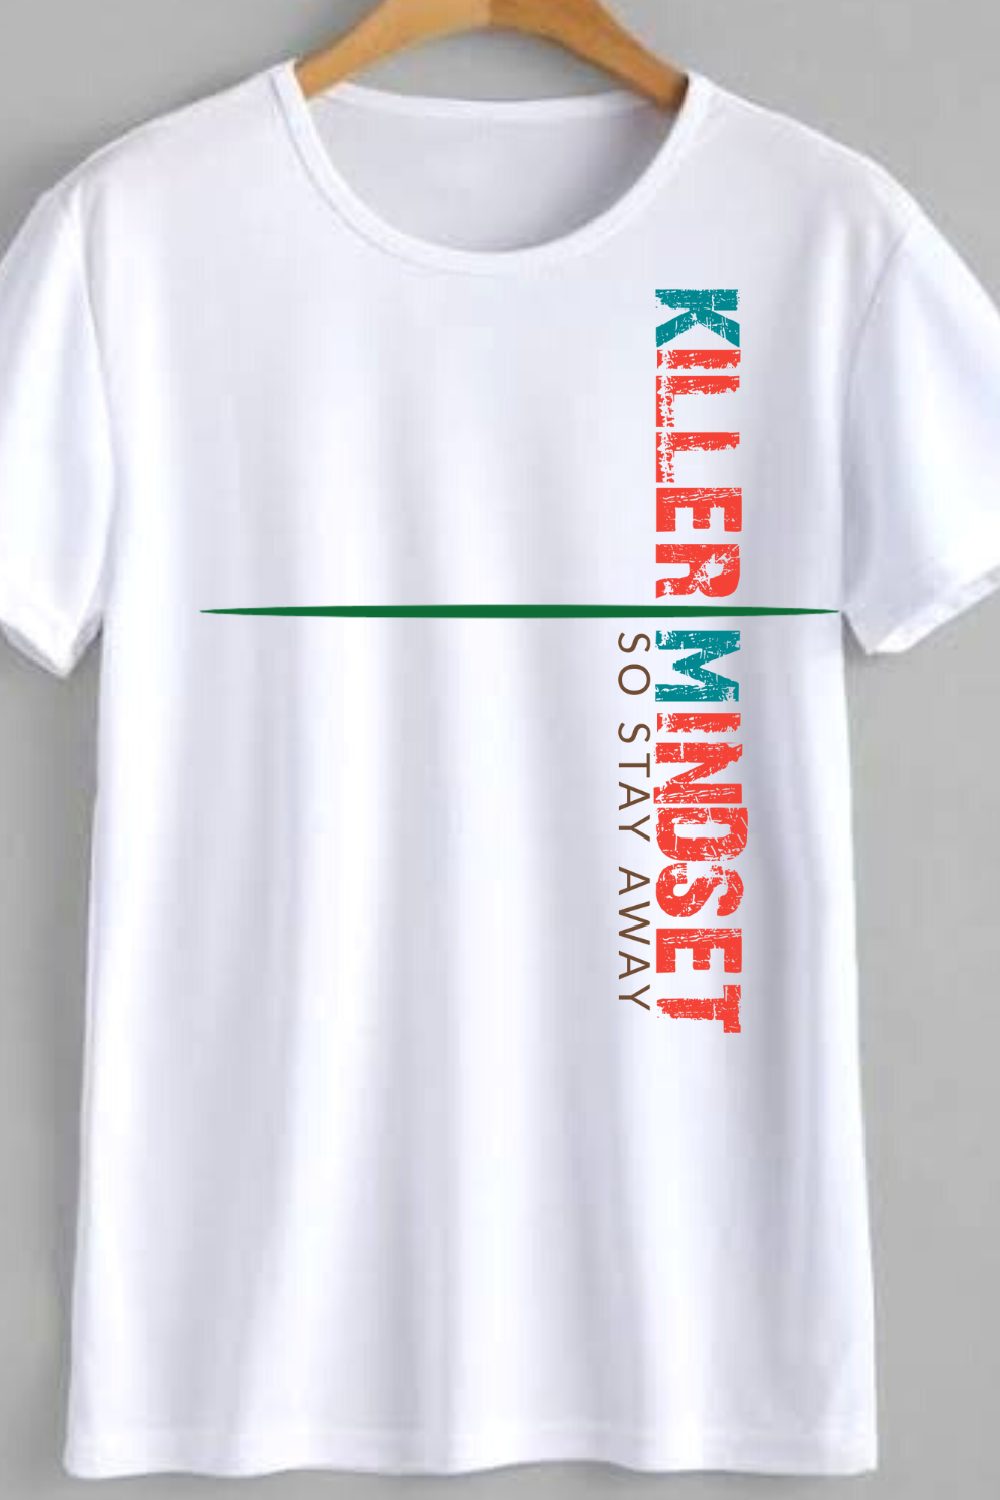 Bundle of simple design for white men T shirts pinterest preview image.